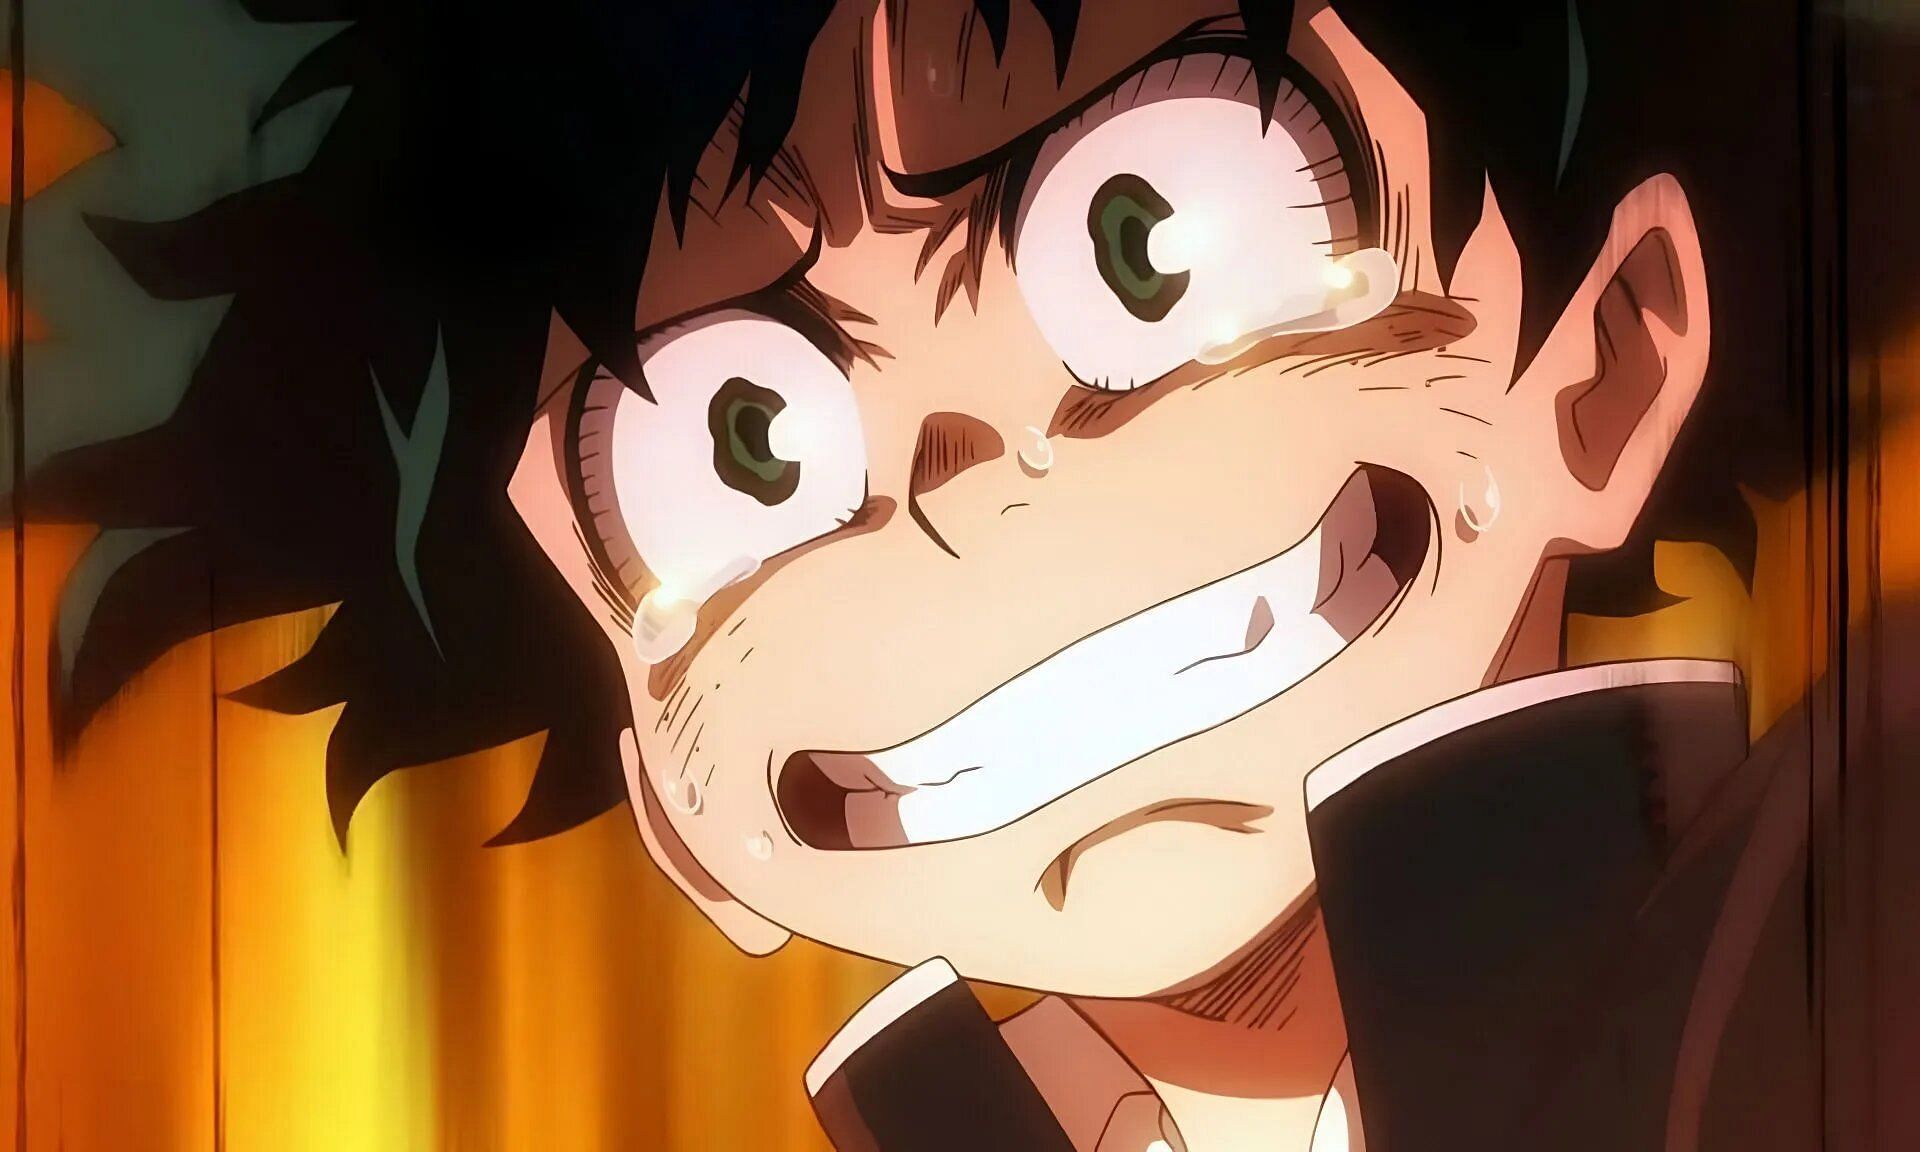 Deku saves Bakugo in the first episode of the anime (Image via Bones).